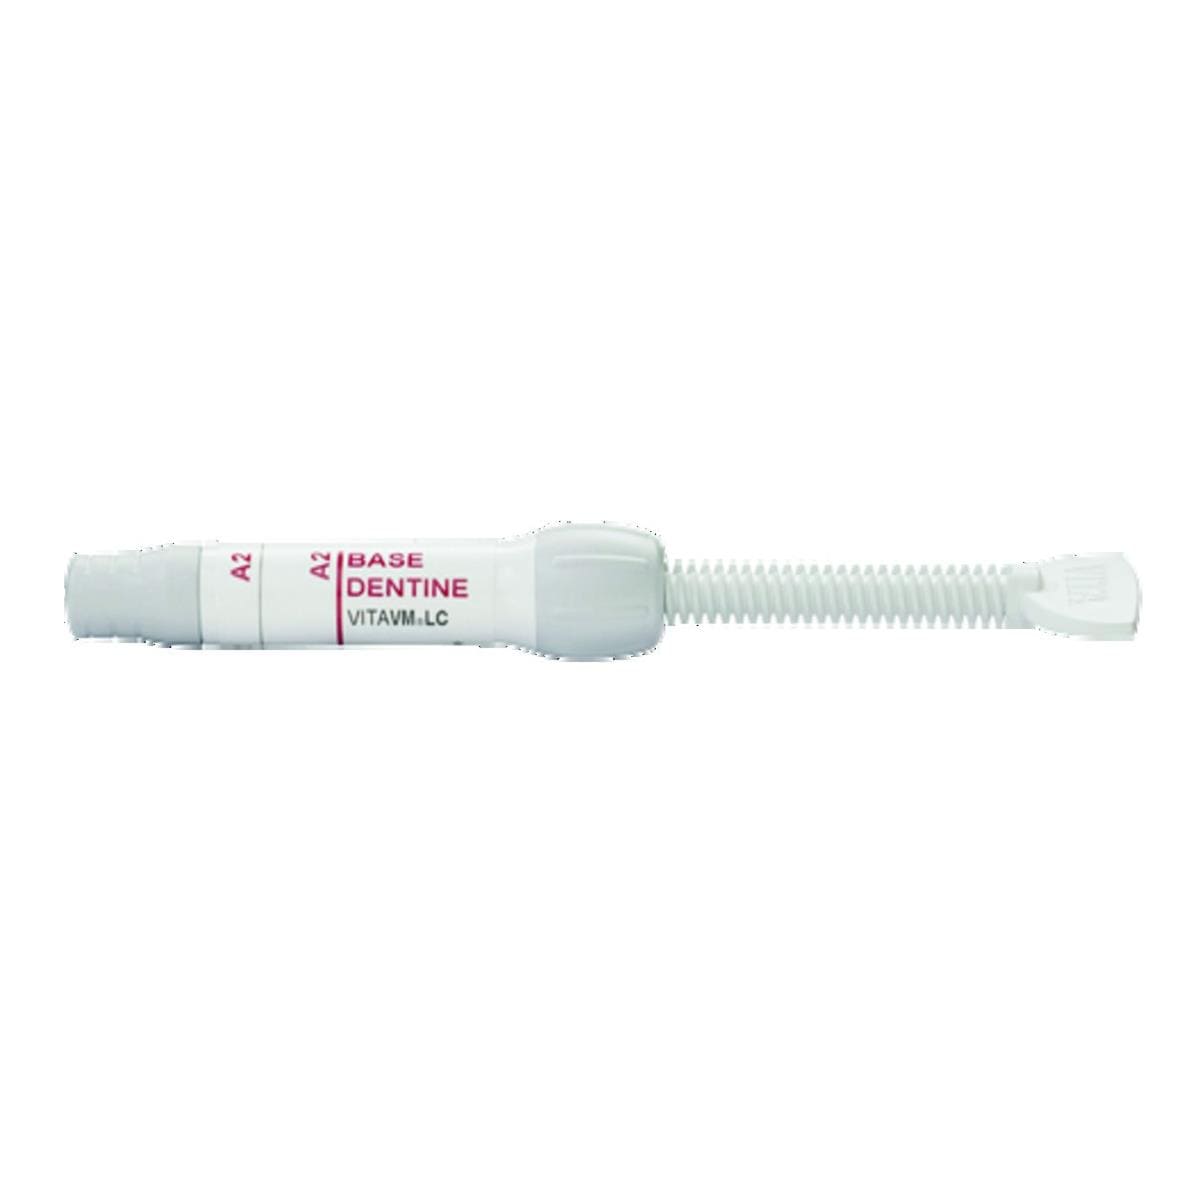 VM LC VITA - 3-D Master - Base Dentine 2L2,5 - La seringue de 4 g